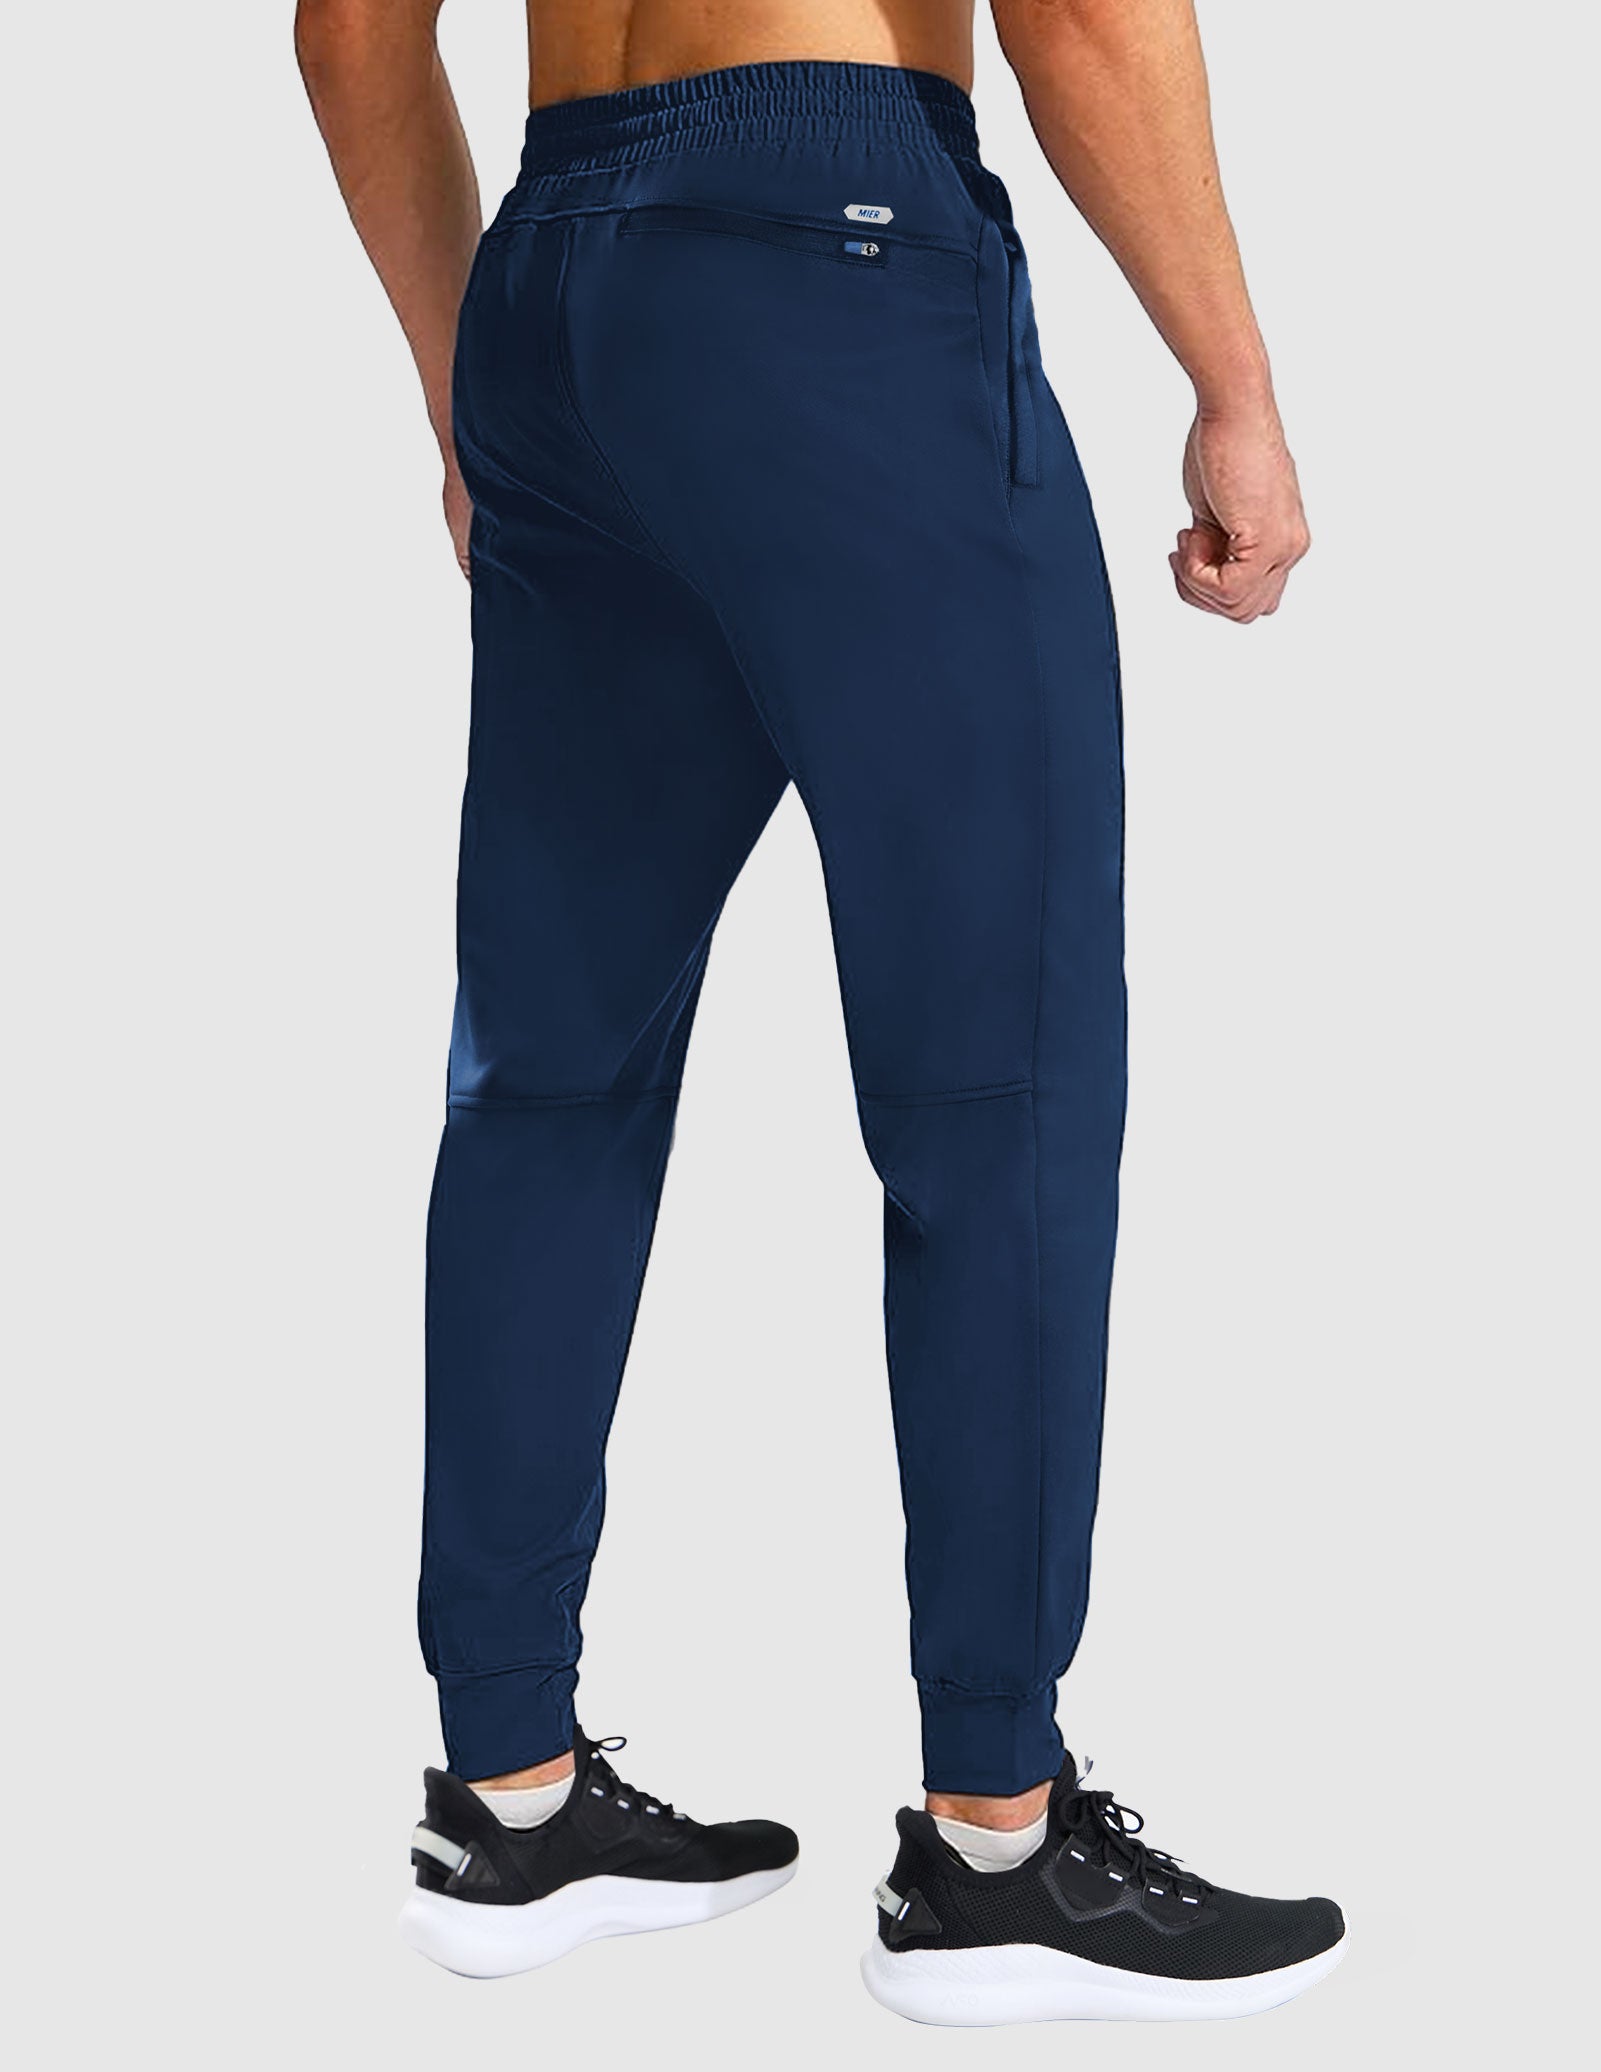 Men's Sweatpants Joggers Athletic Track Pants with Zipper Pockets